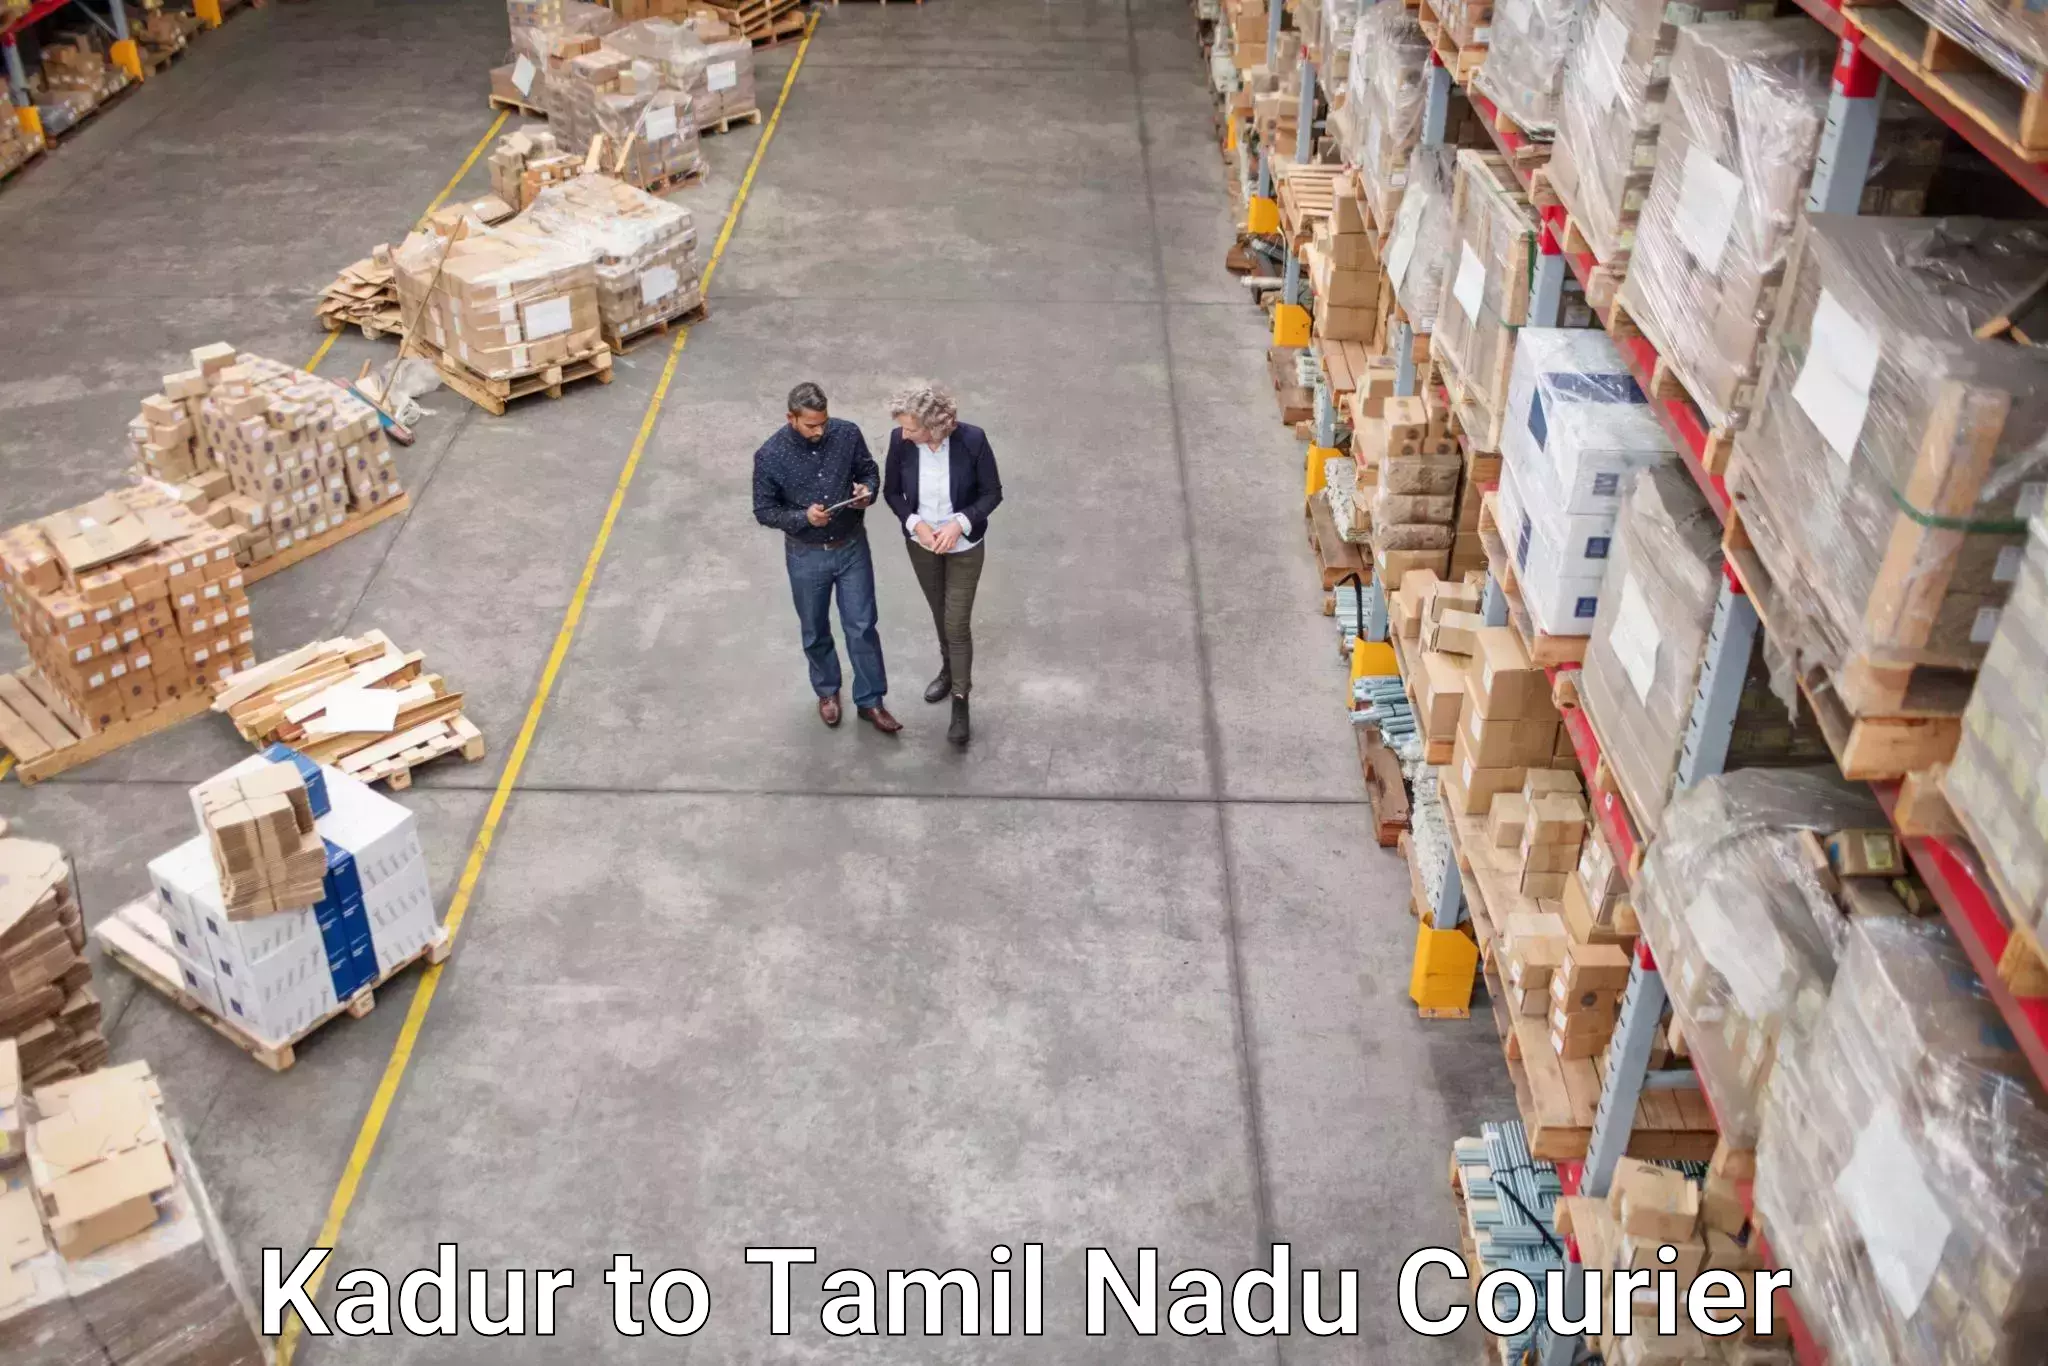 Parcel handling and care Kadur to Tamil Nadu